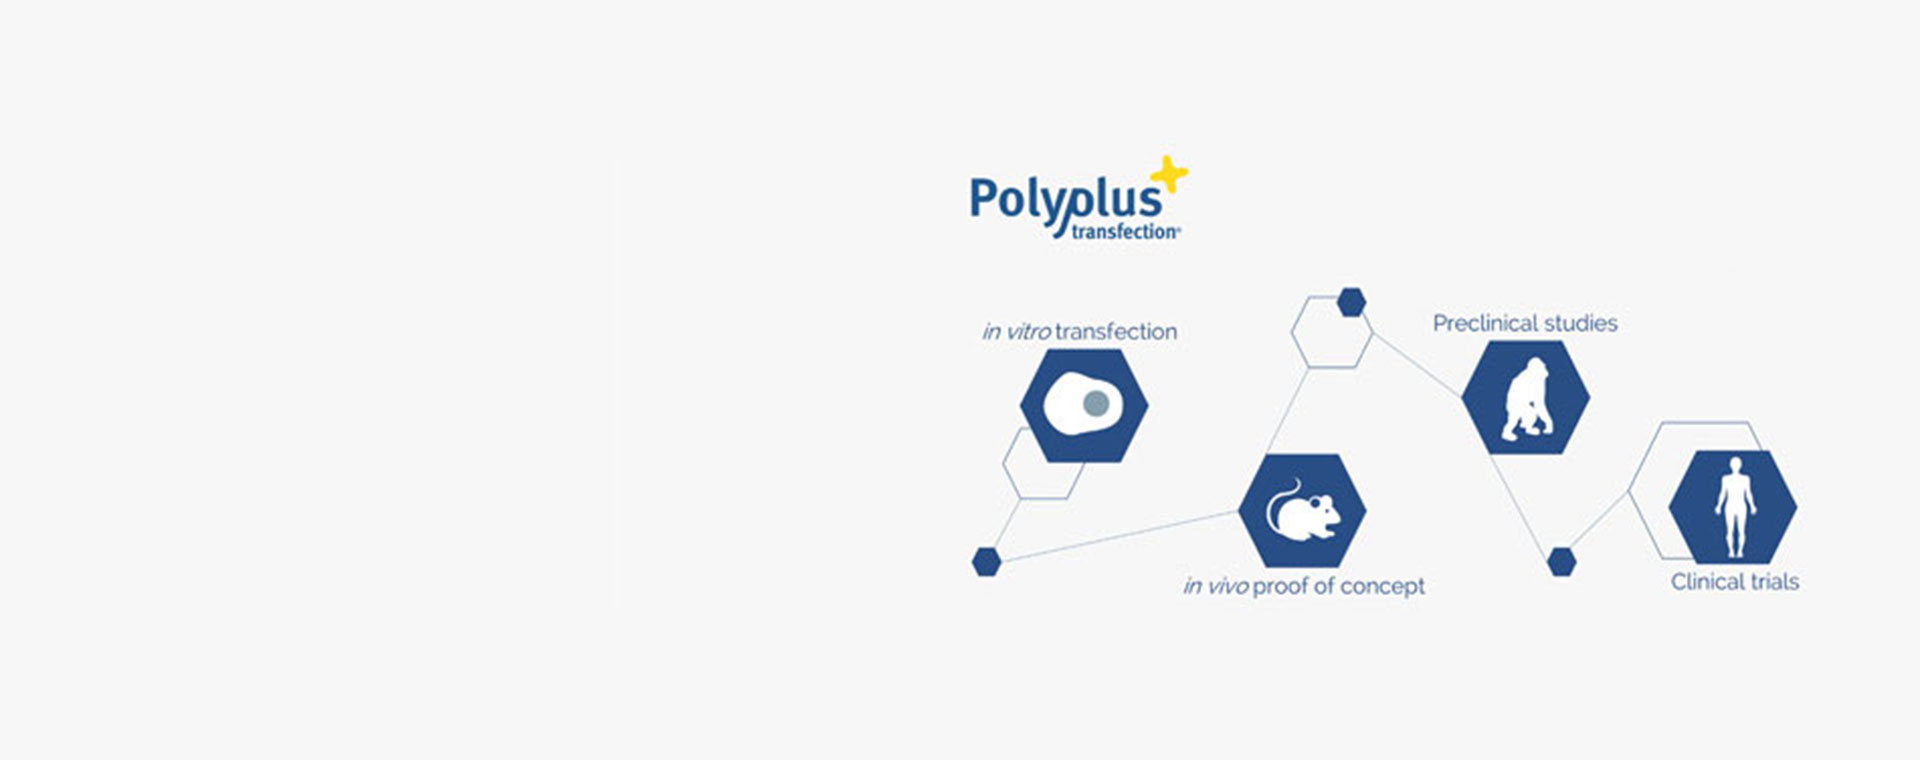 polyplus-in-vivo-delivery-webinar-1920x760.jpg